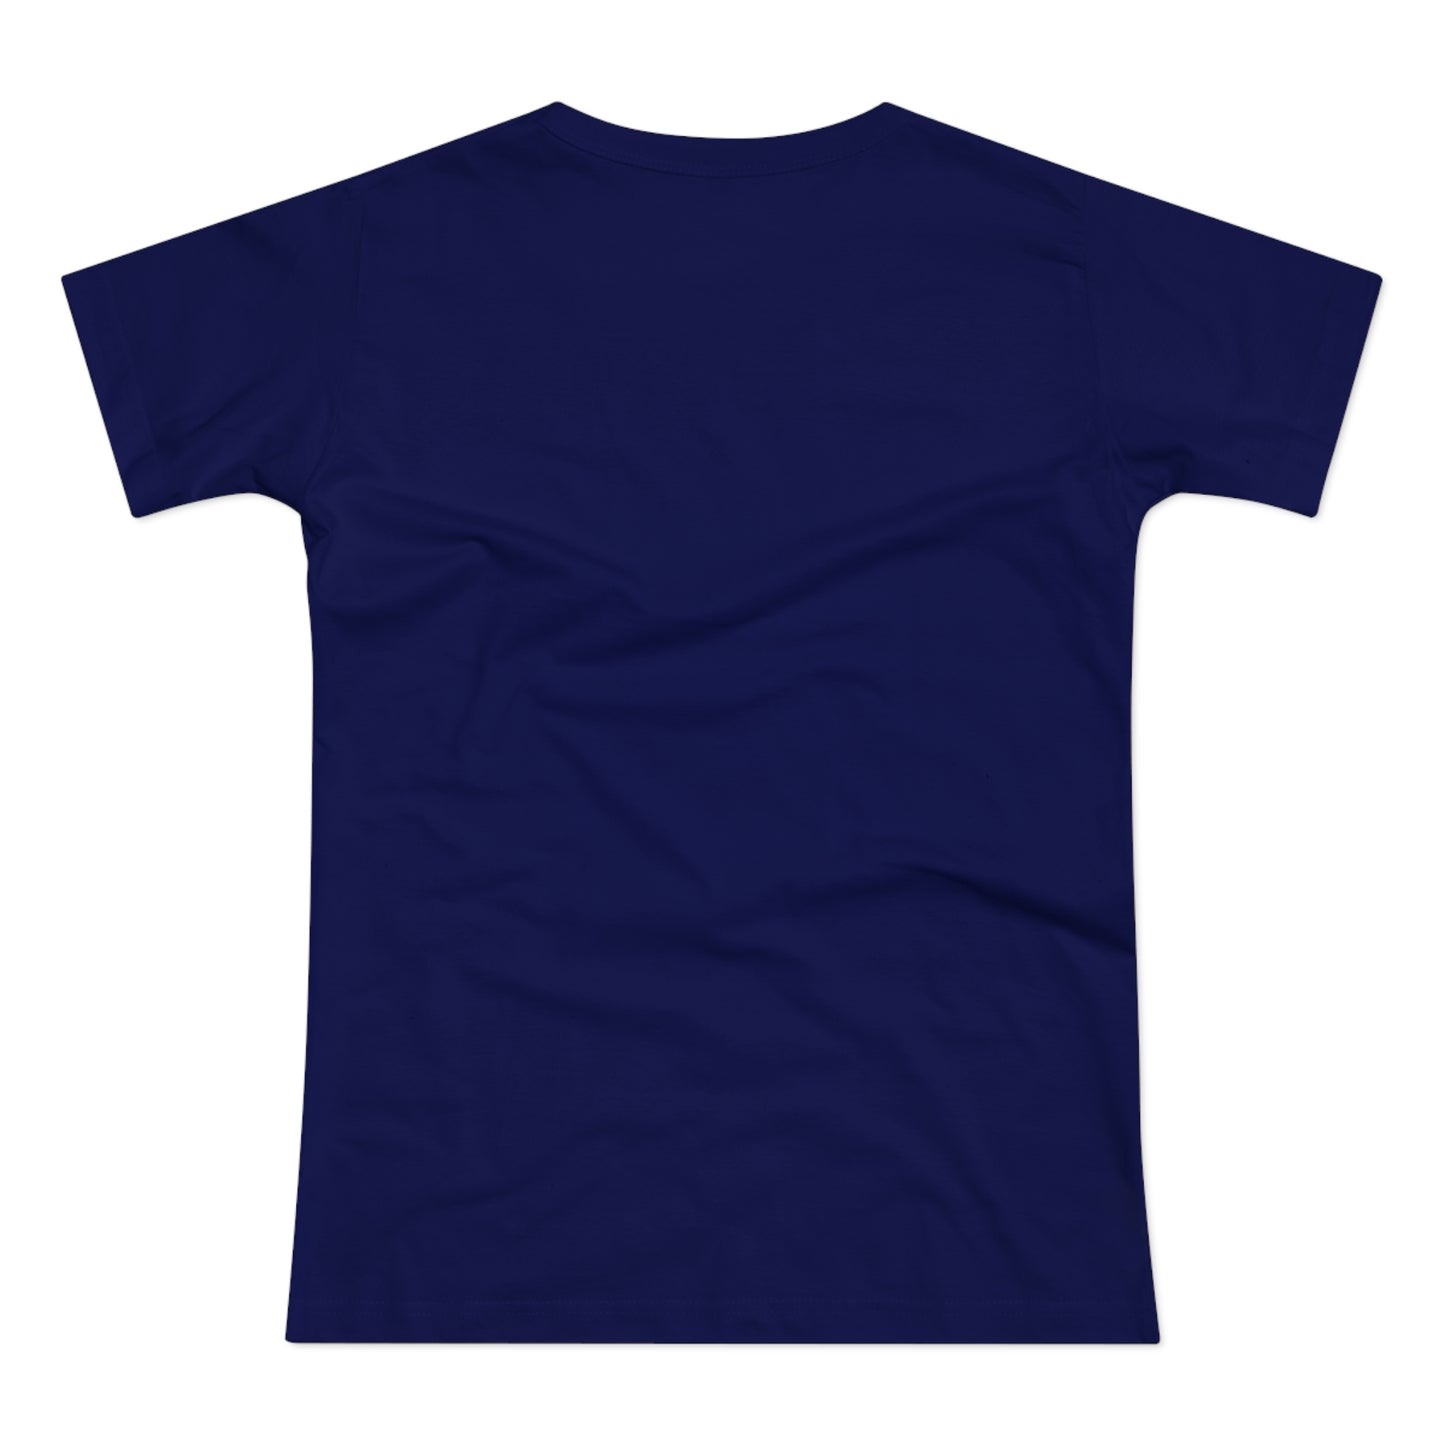 a dark blue t - shirt on a white background